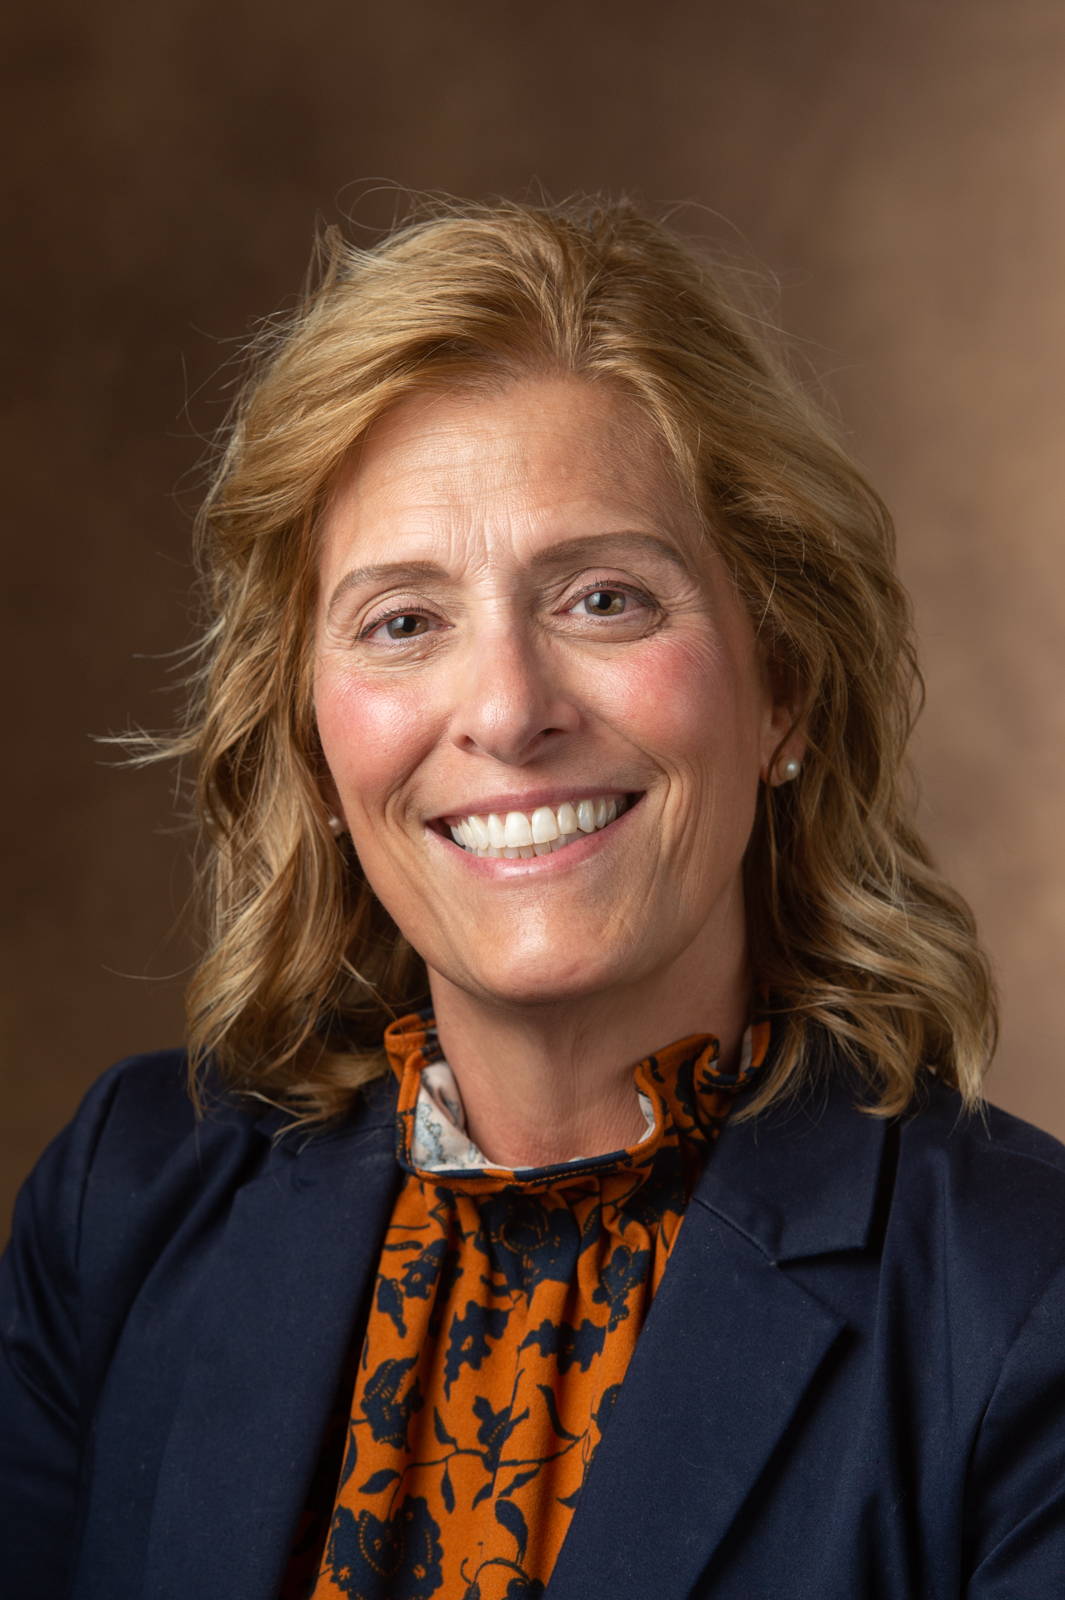 A portrait photo of Dr. Stephanie Cann